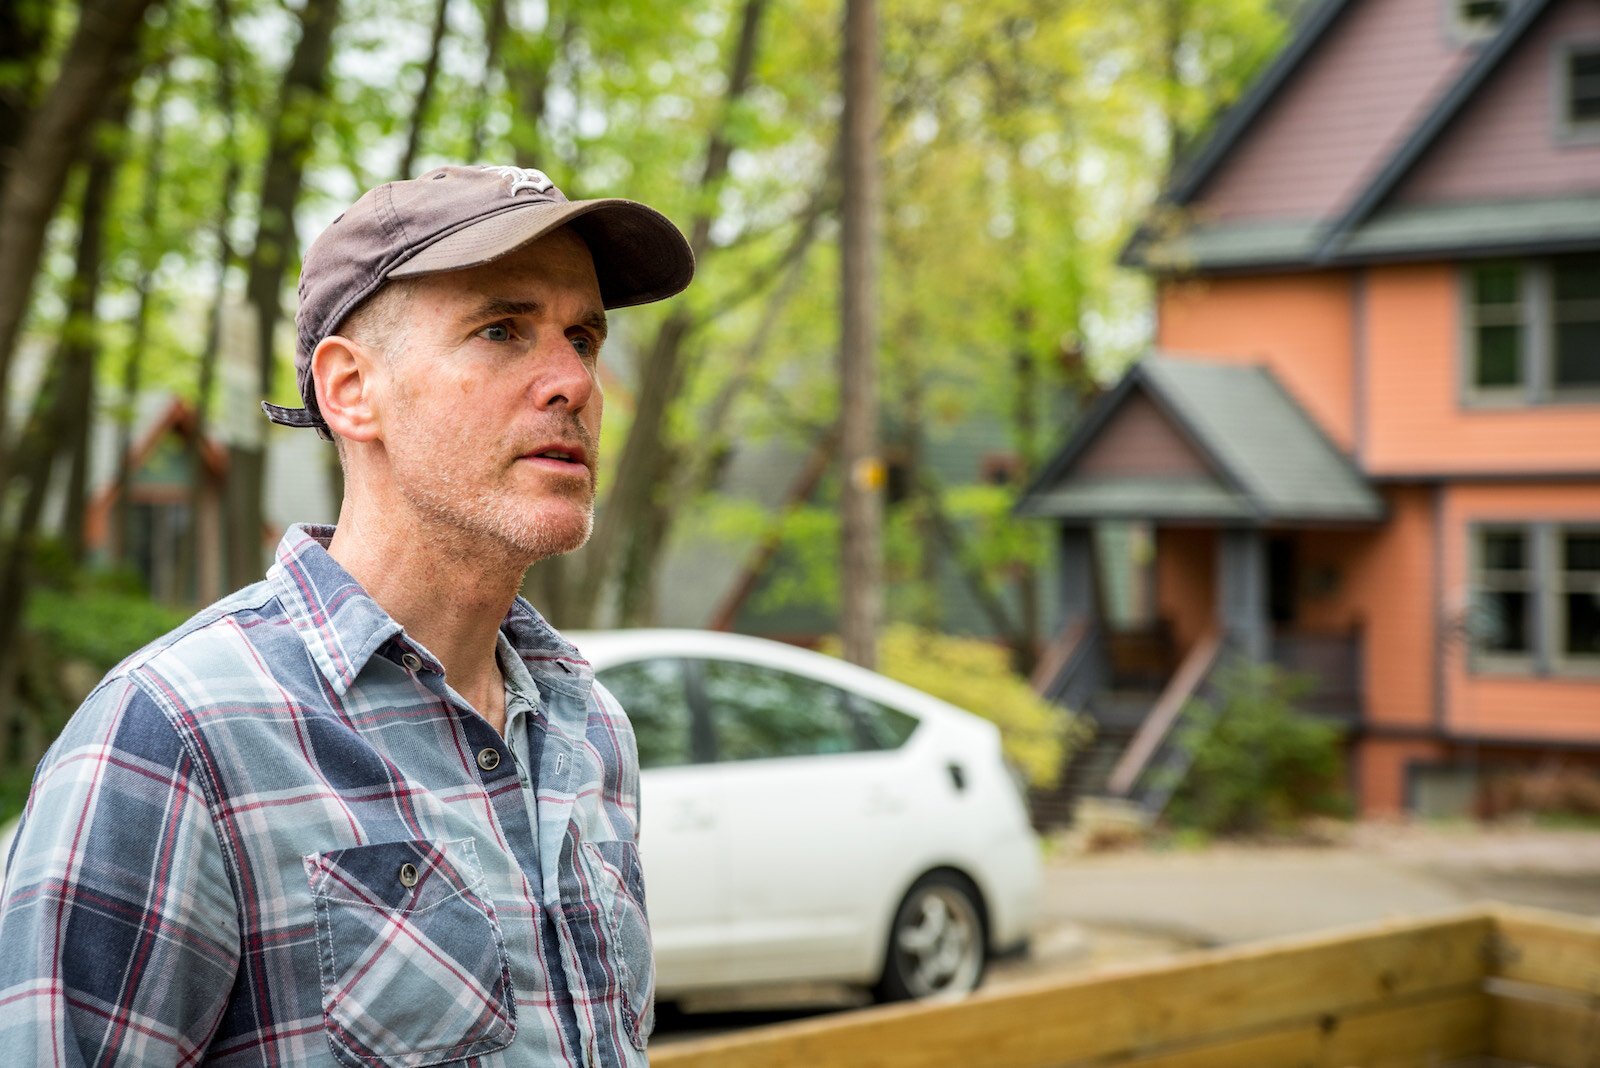 Matt Gross built the house where he lives in the neighborhood. and the house he built.